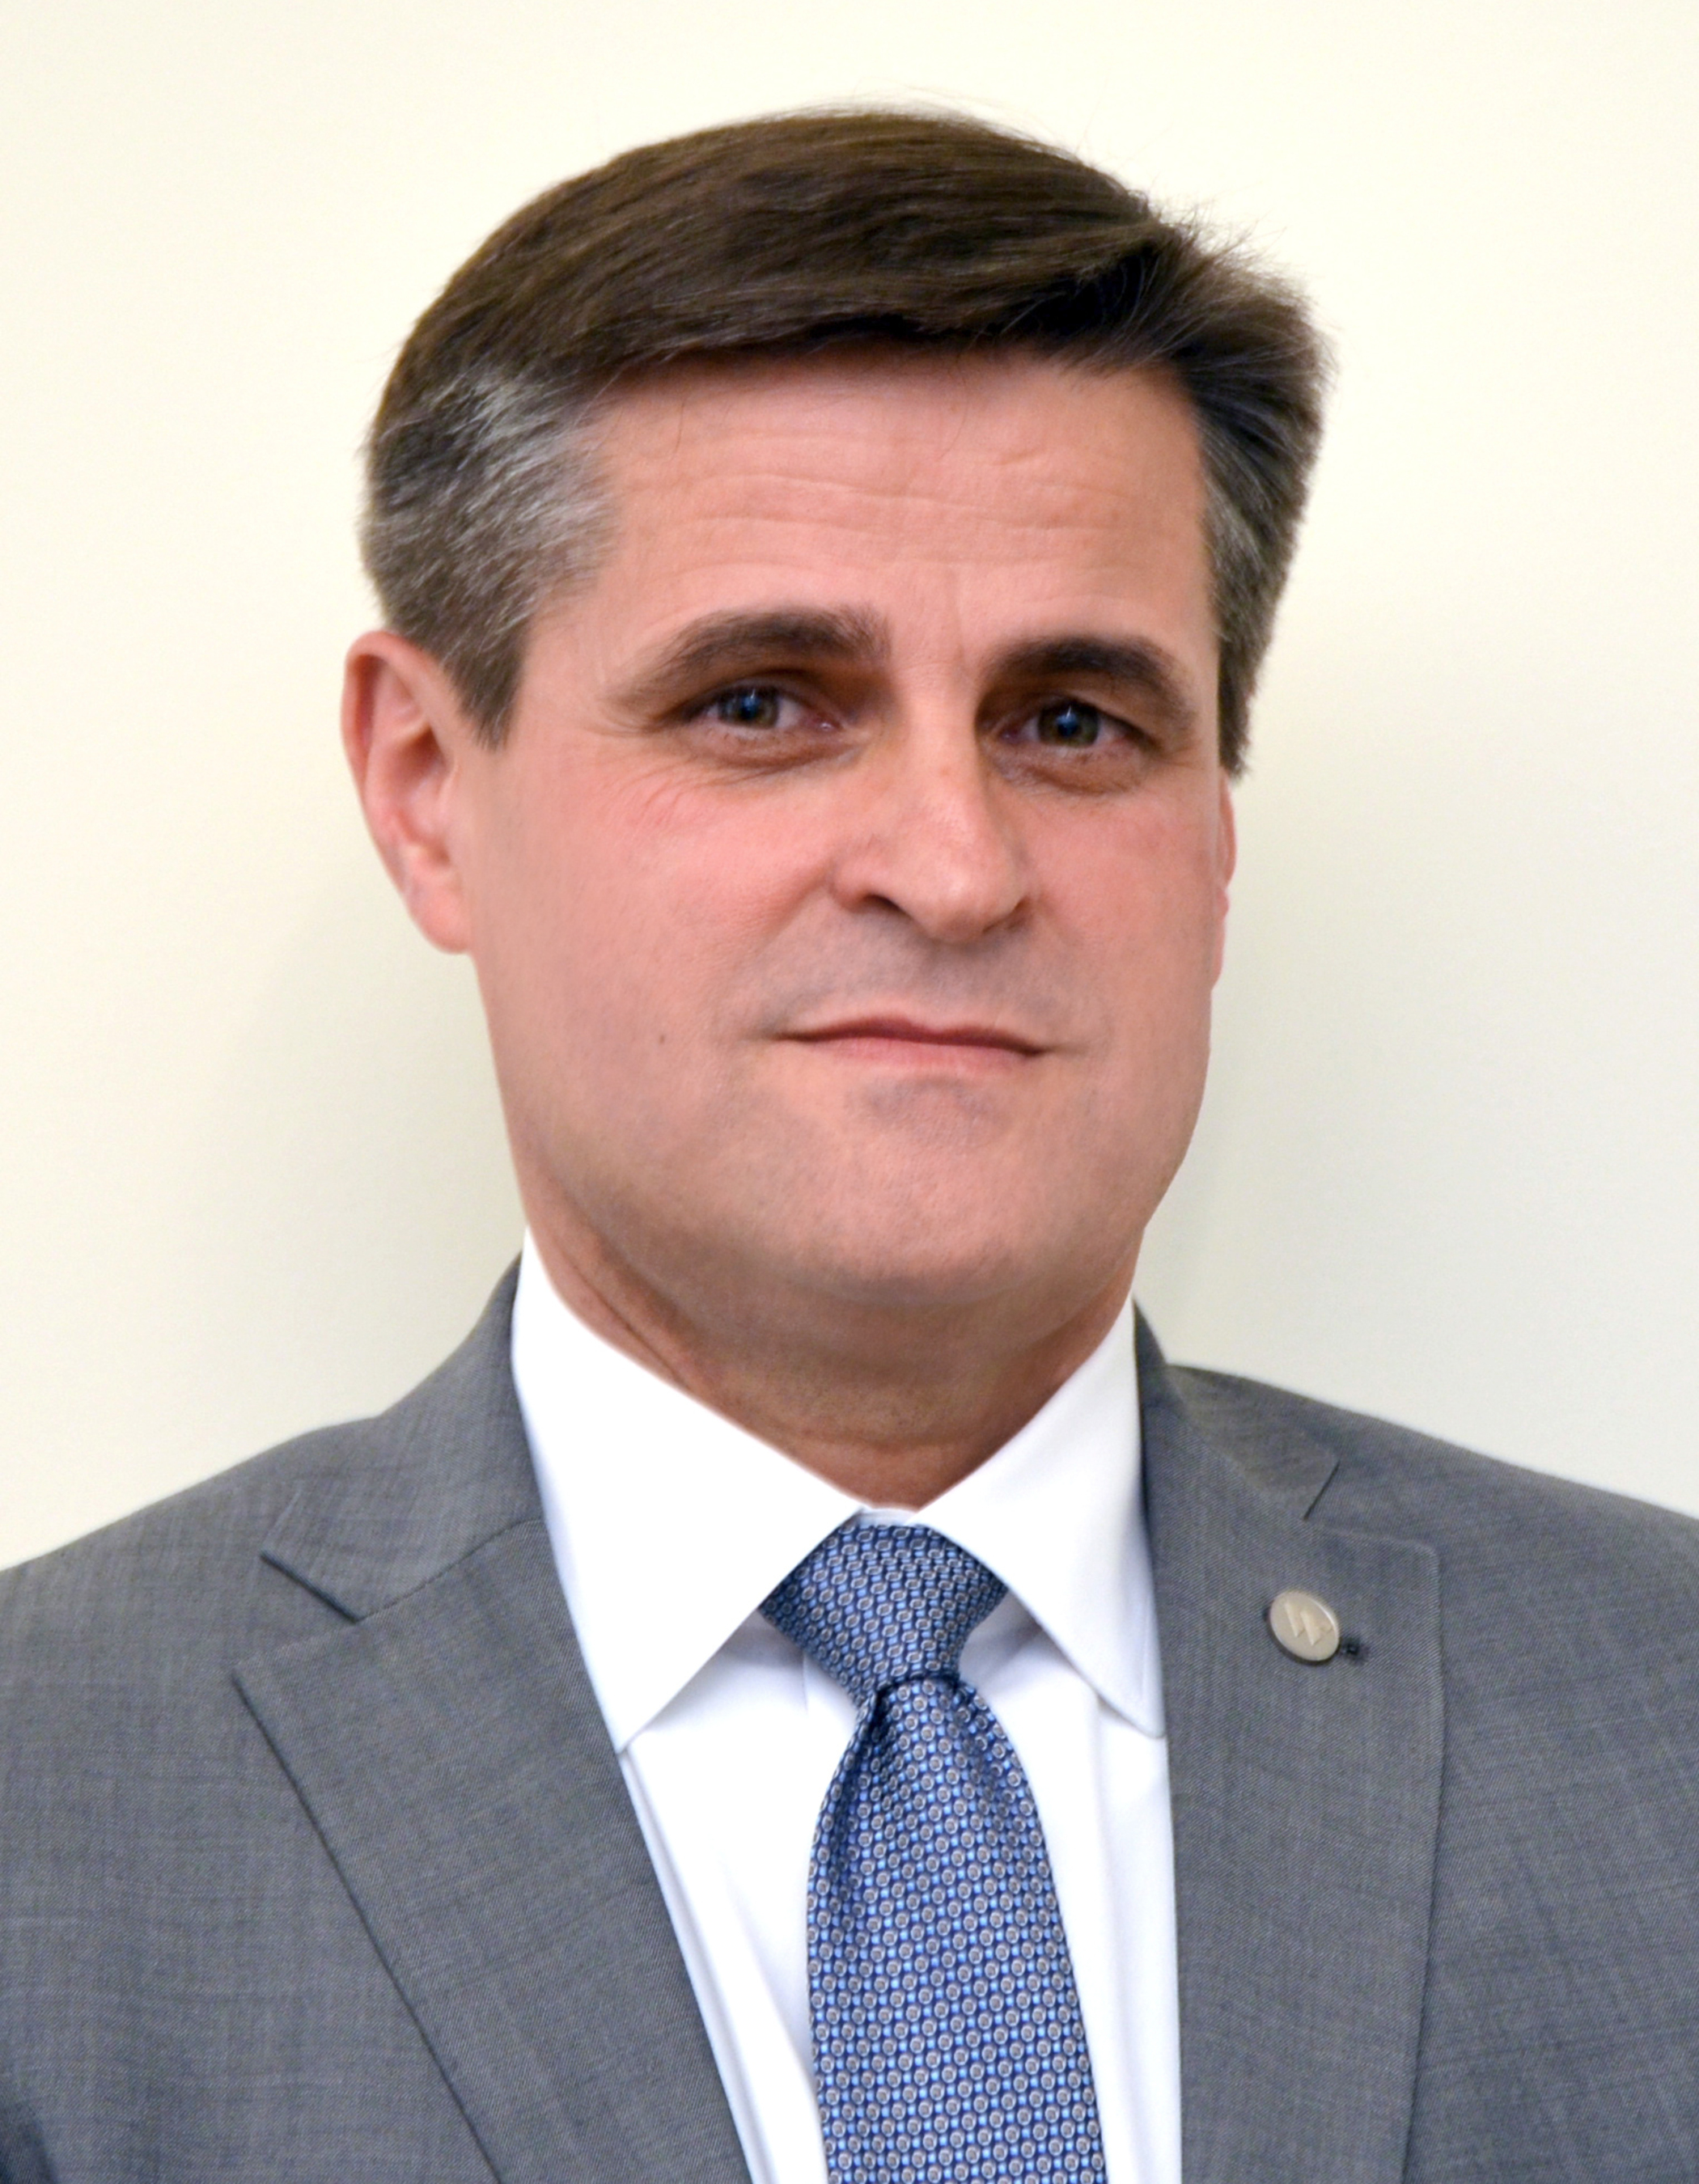 Bernard Garrigues, executive vice president, CHRO at Webster (PRNewsFoto/Webster Financial Corporation)